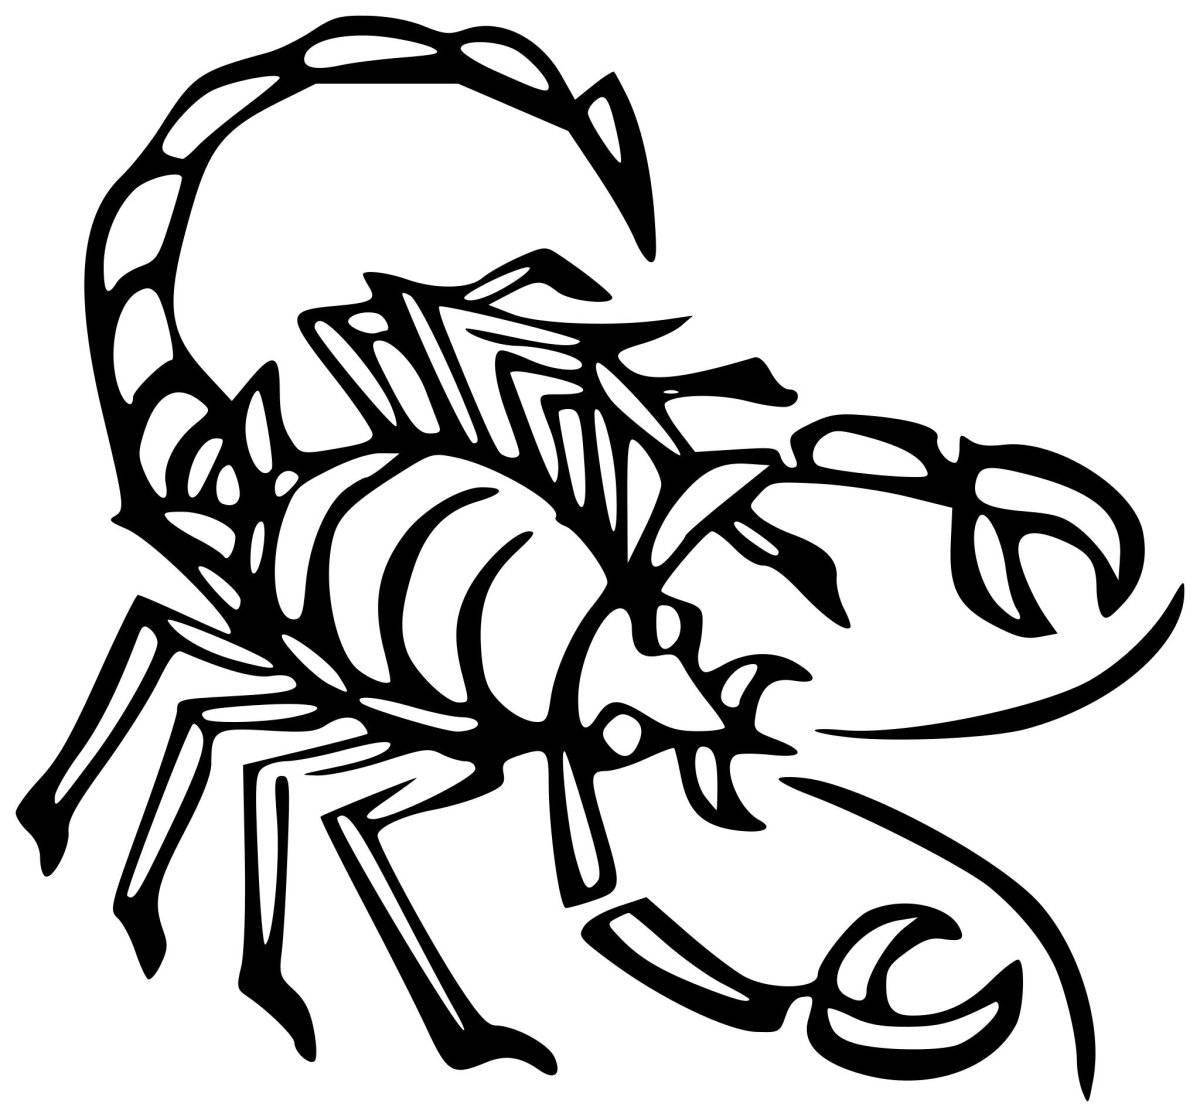 Fantastic scorpion coloring book for kids